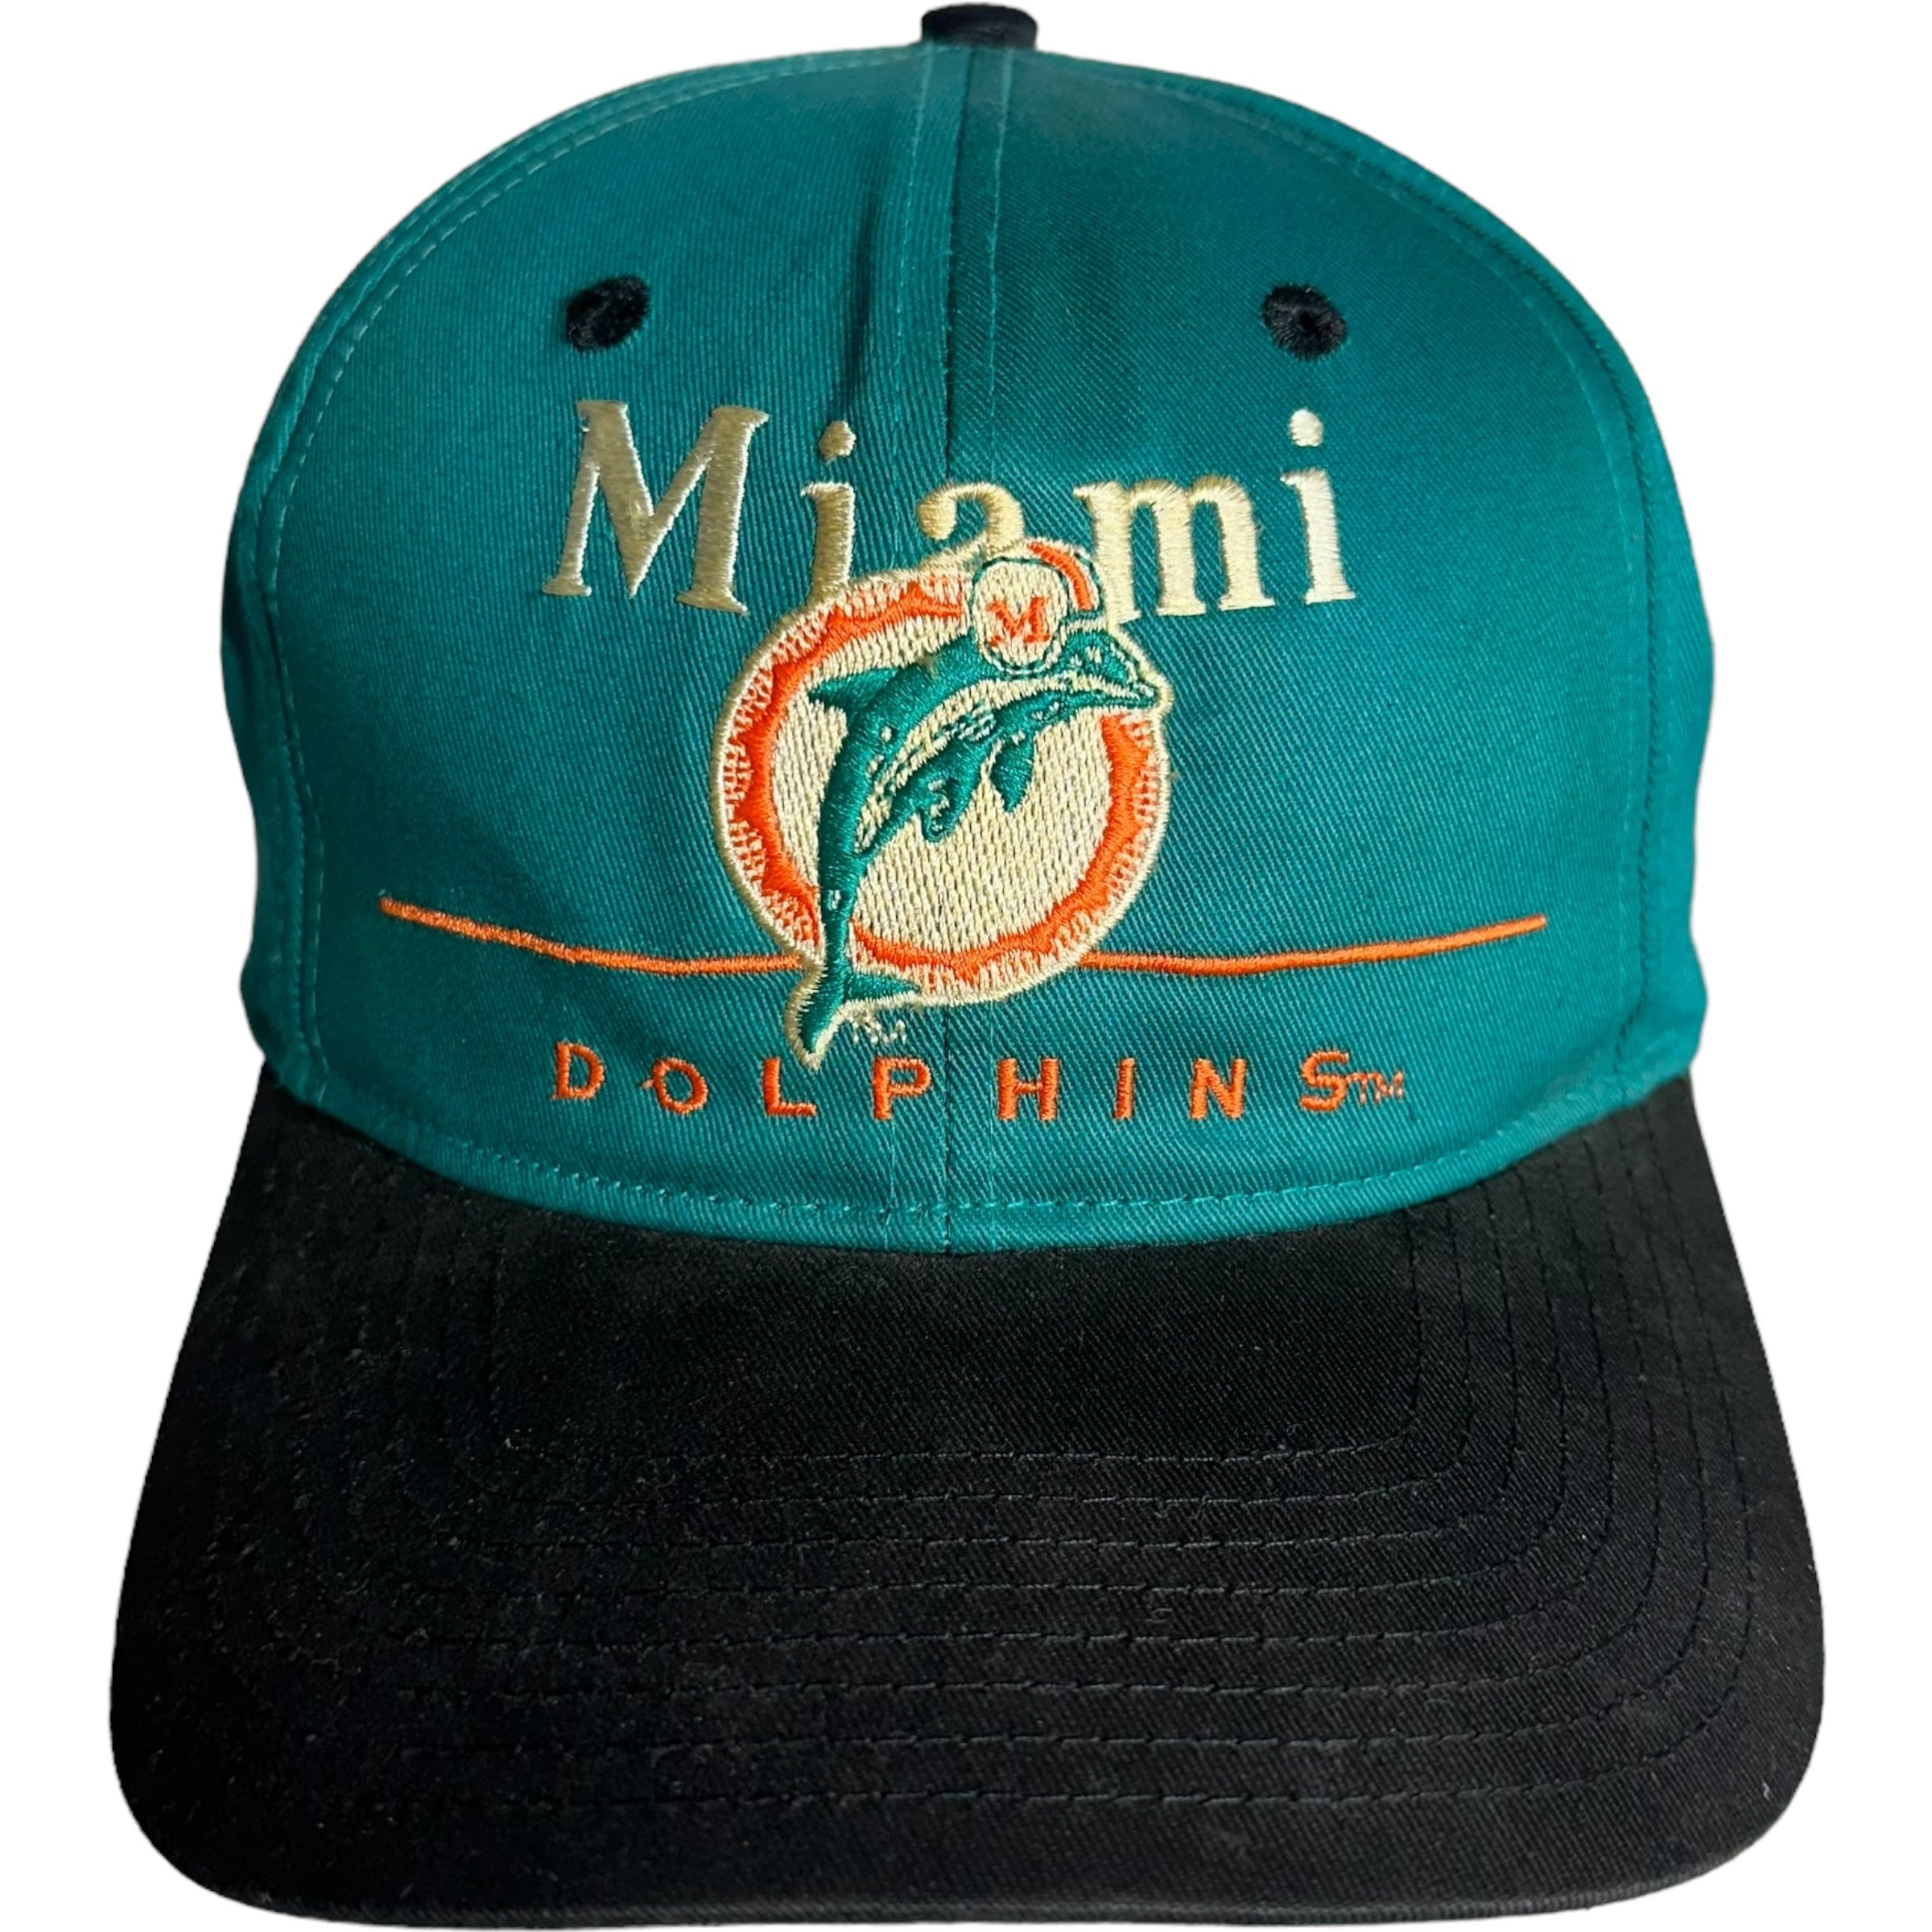 Vintage Miami Dolphins Snapback Hat